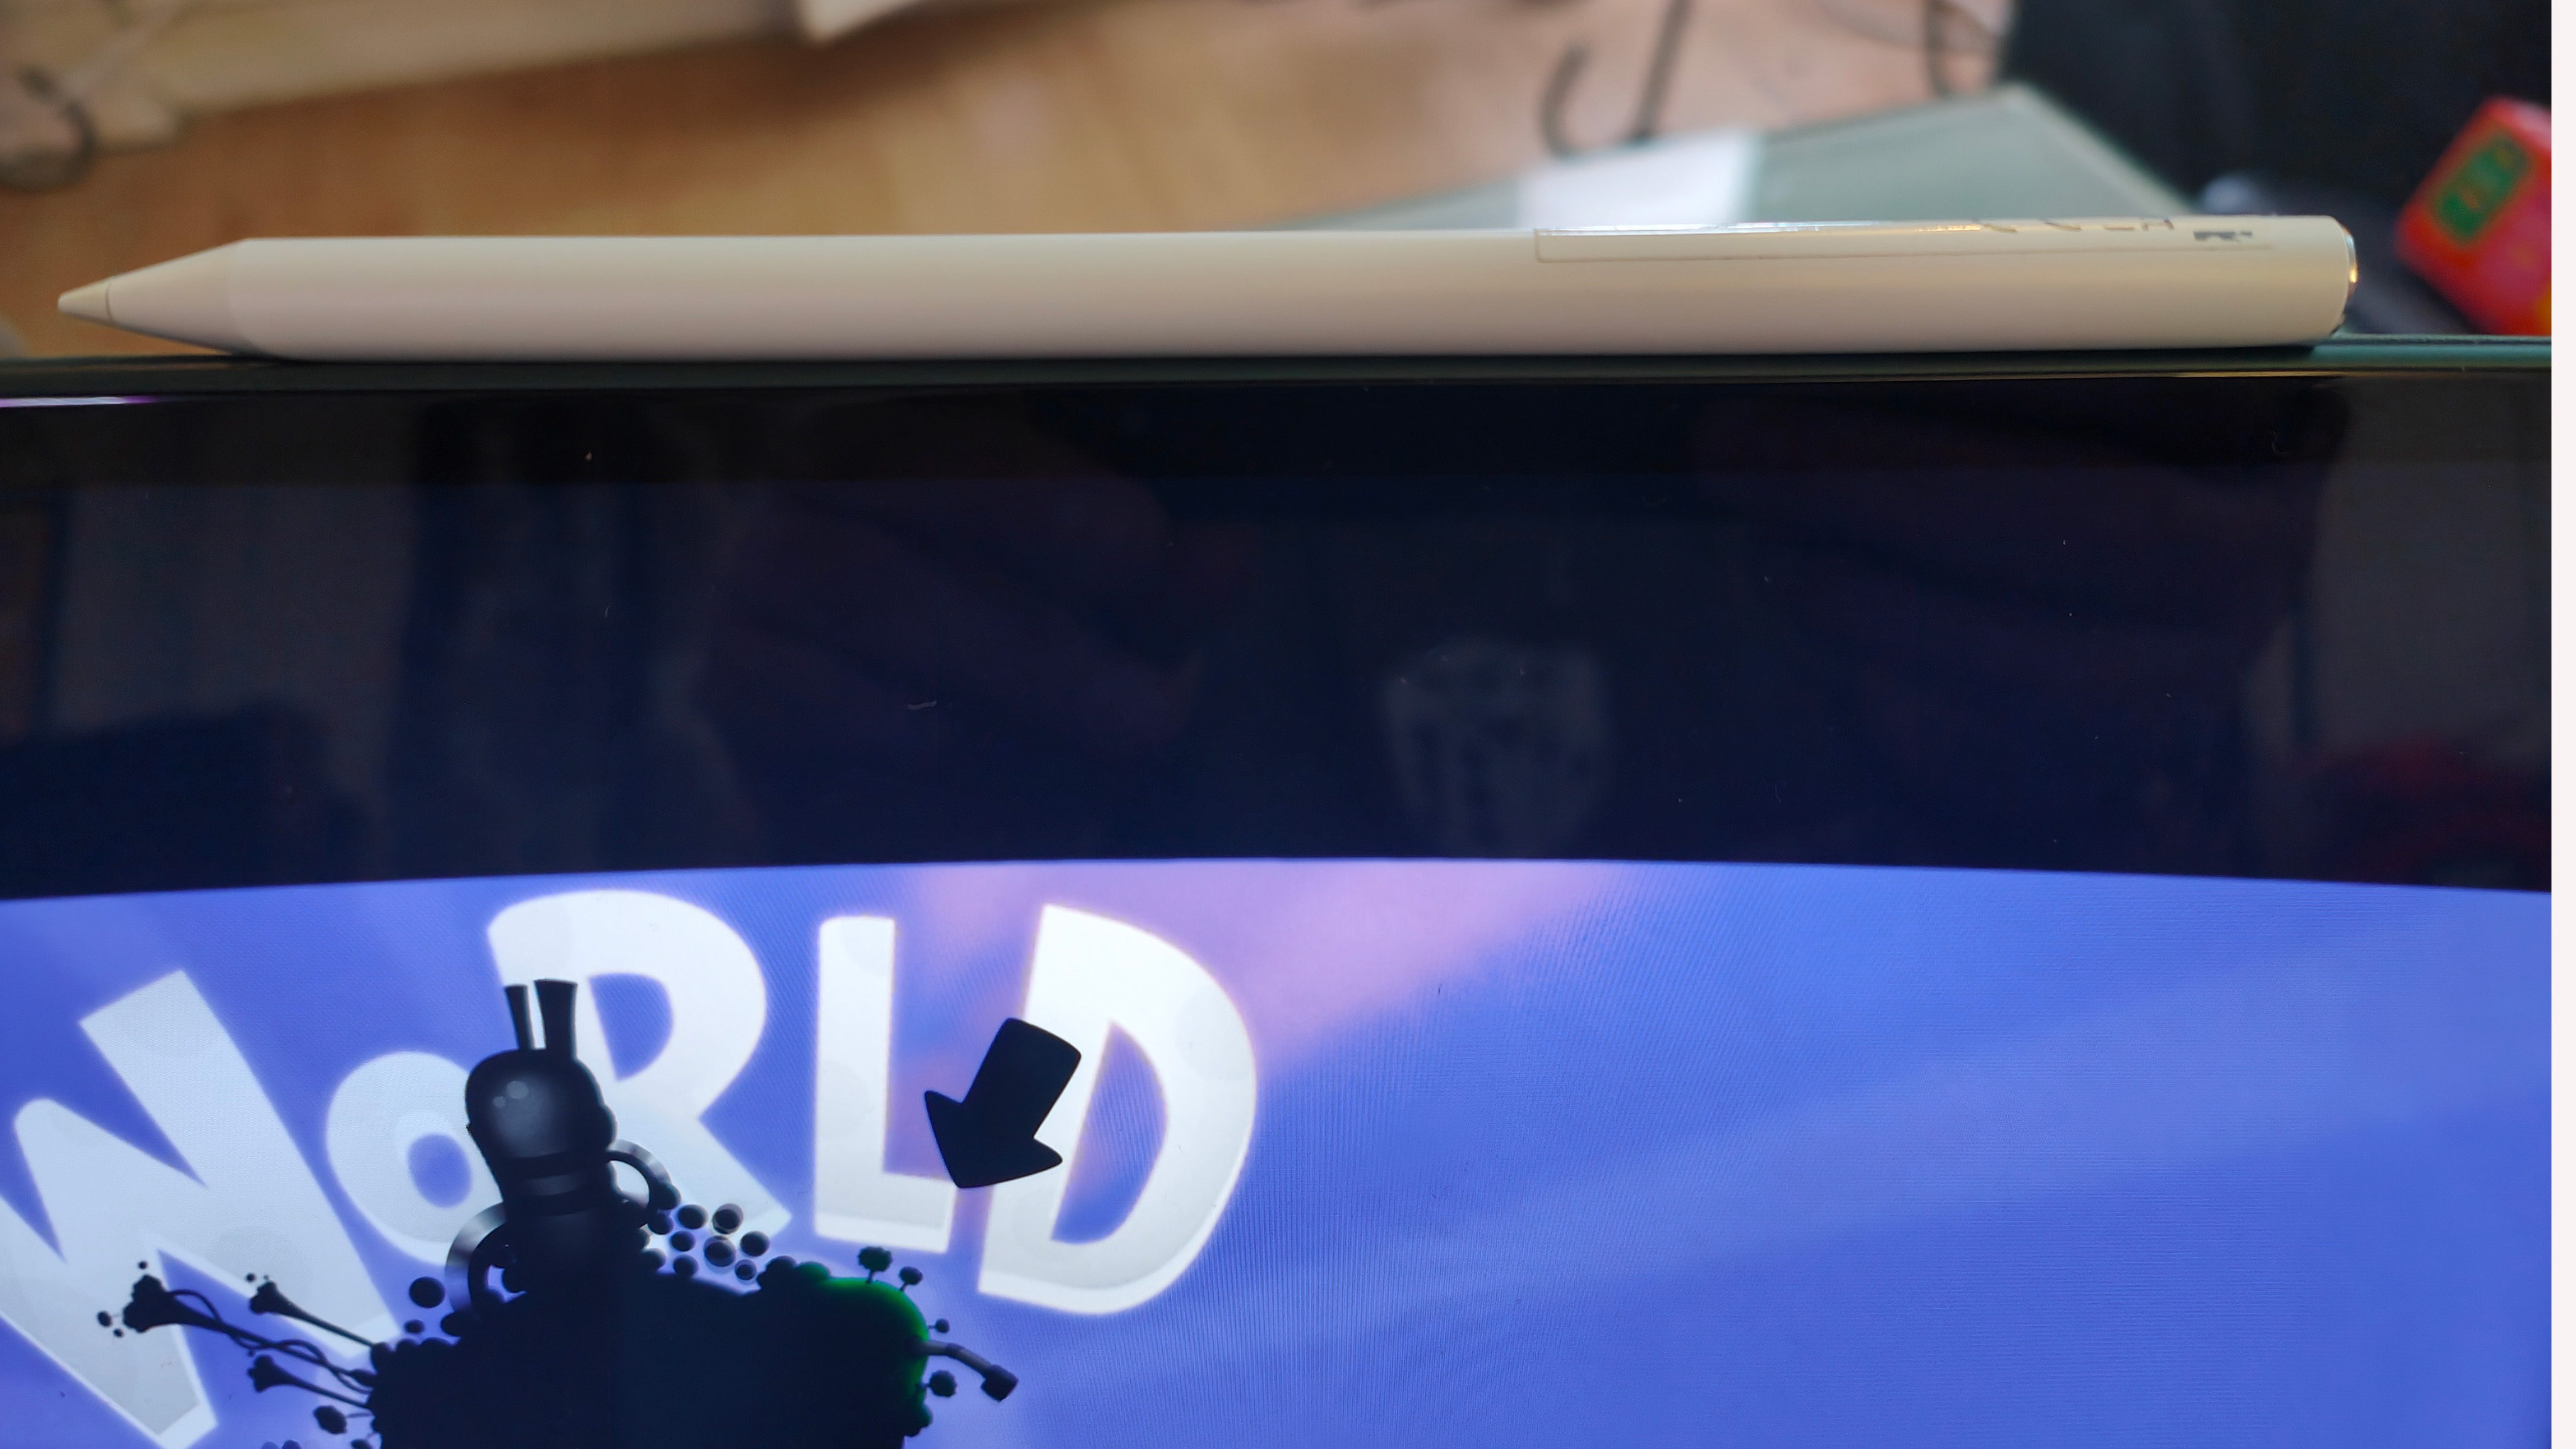 The OnePlus Pad stylus